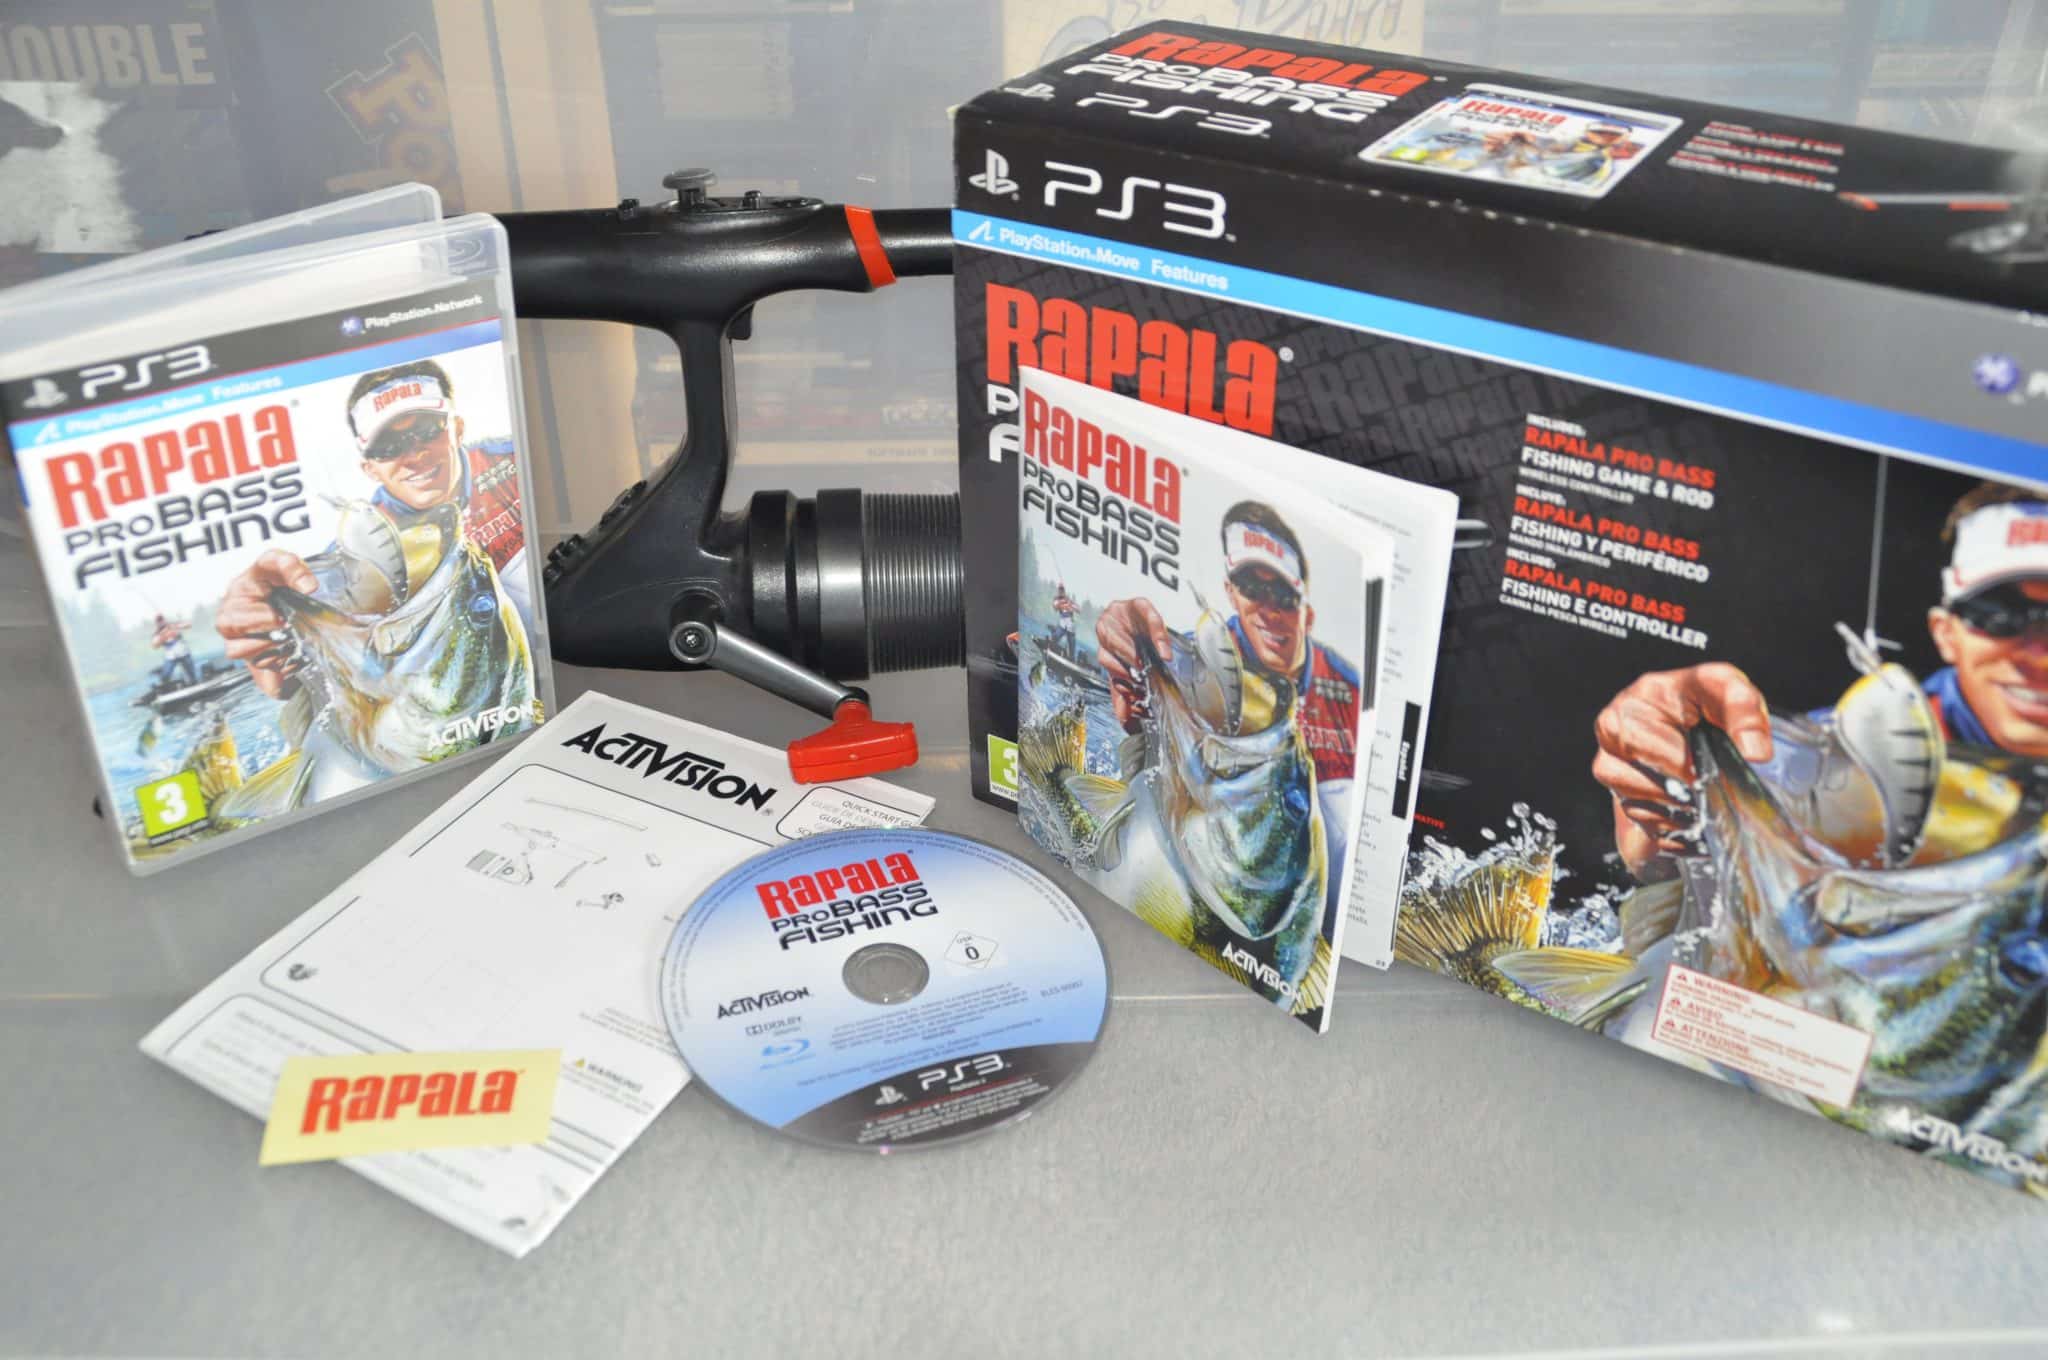 Fishing Without A Wire - Rapala Pro Bass Fishing PS3 • AmigaGuru's GamerBlog